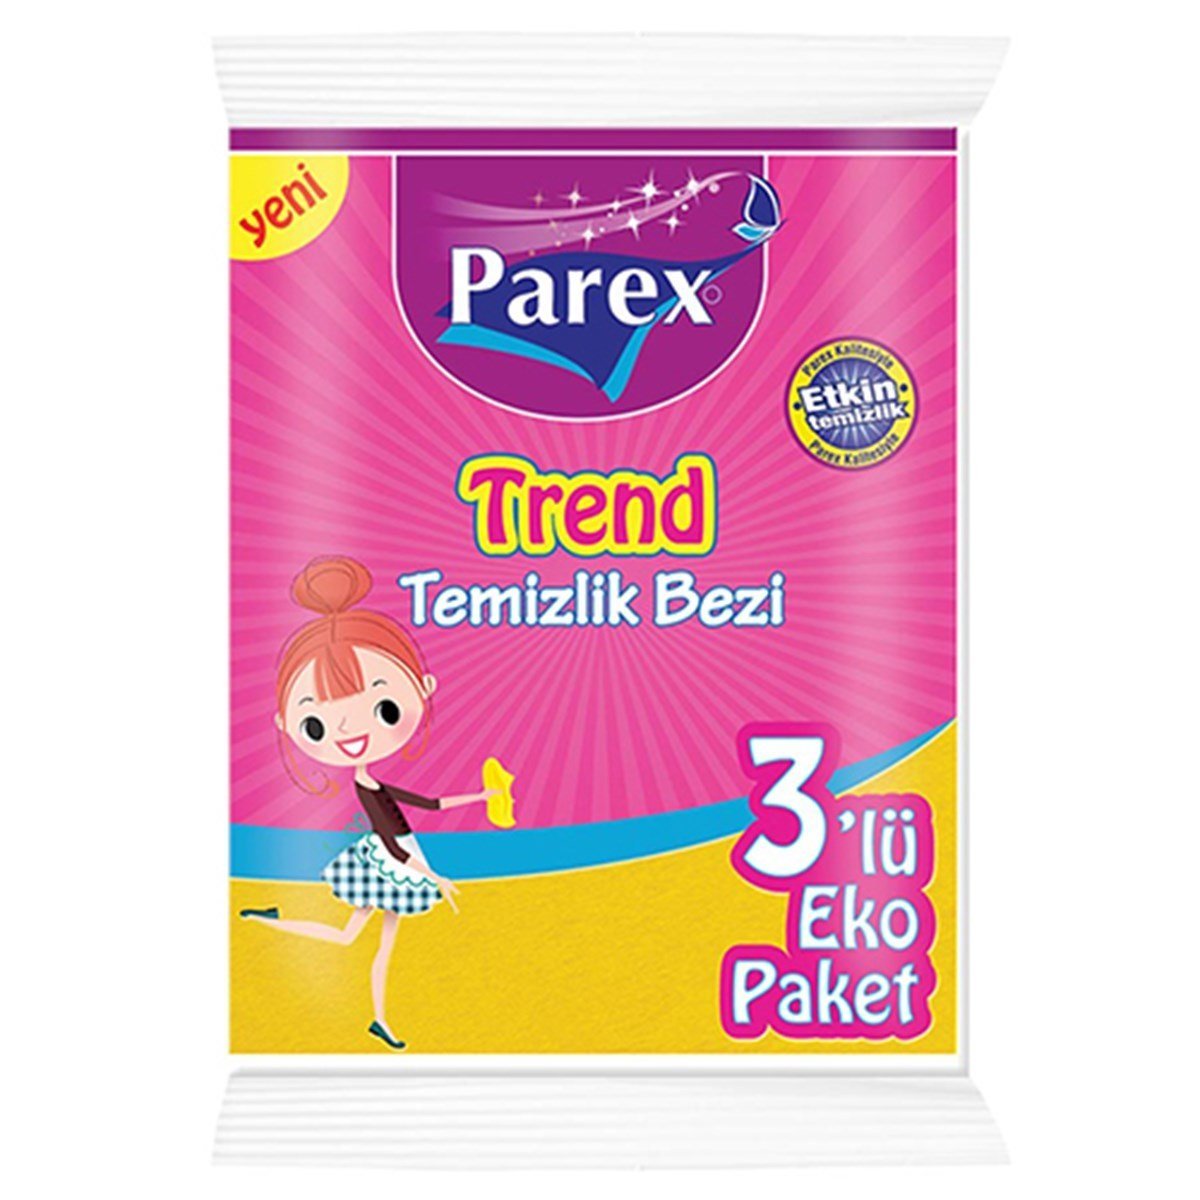 Parex Trend Temizlik Bezi 3lü